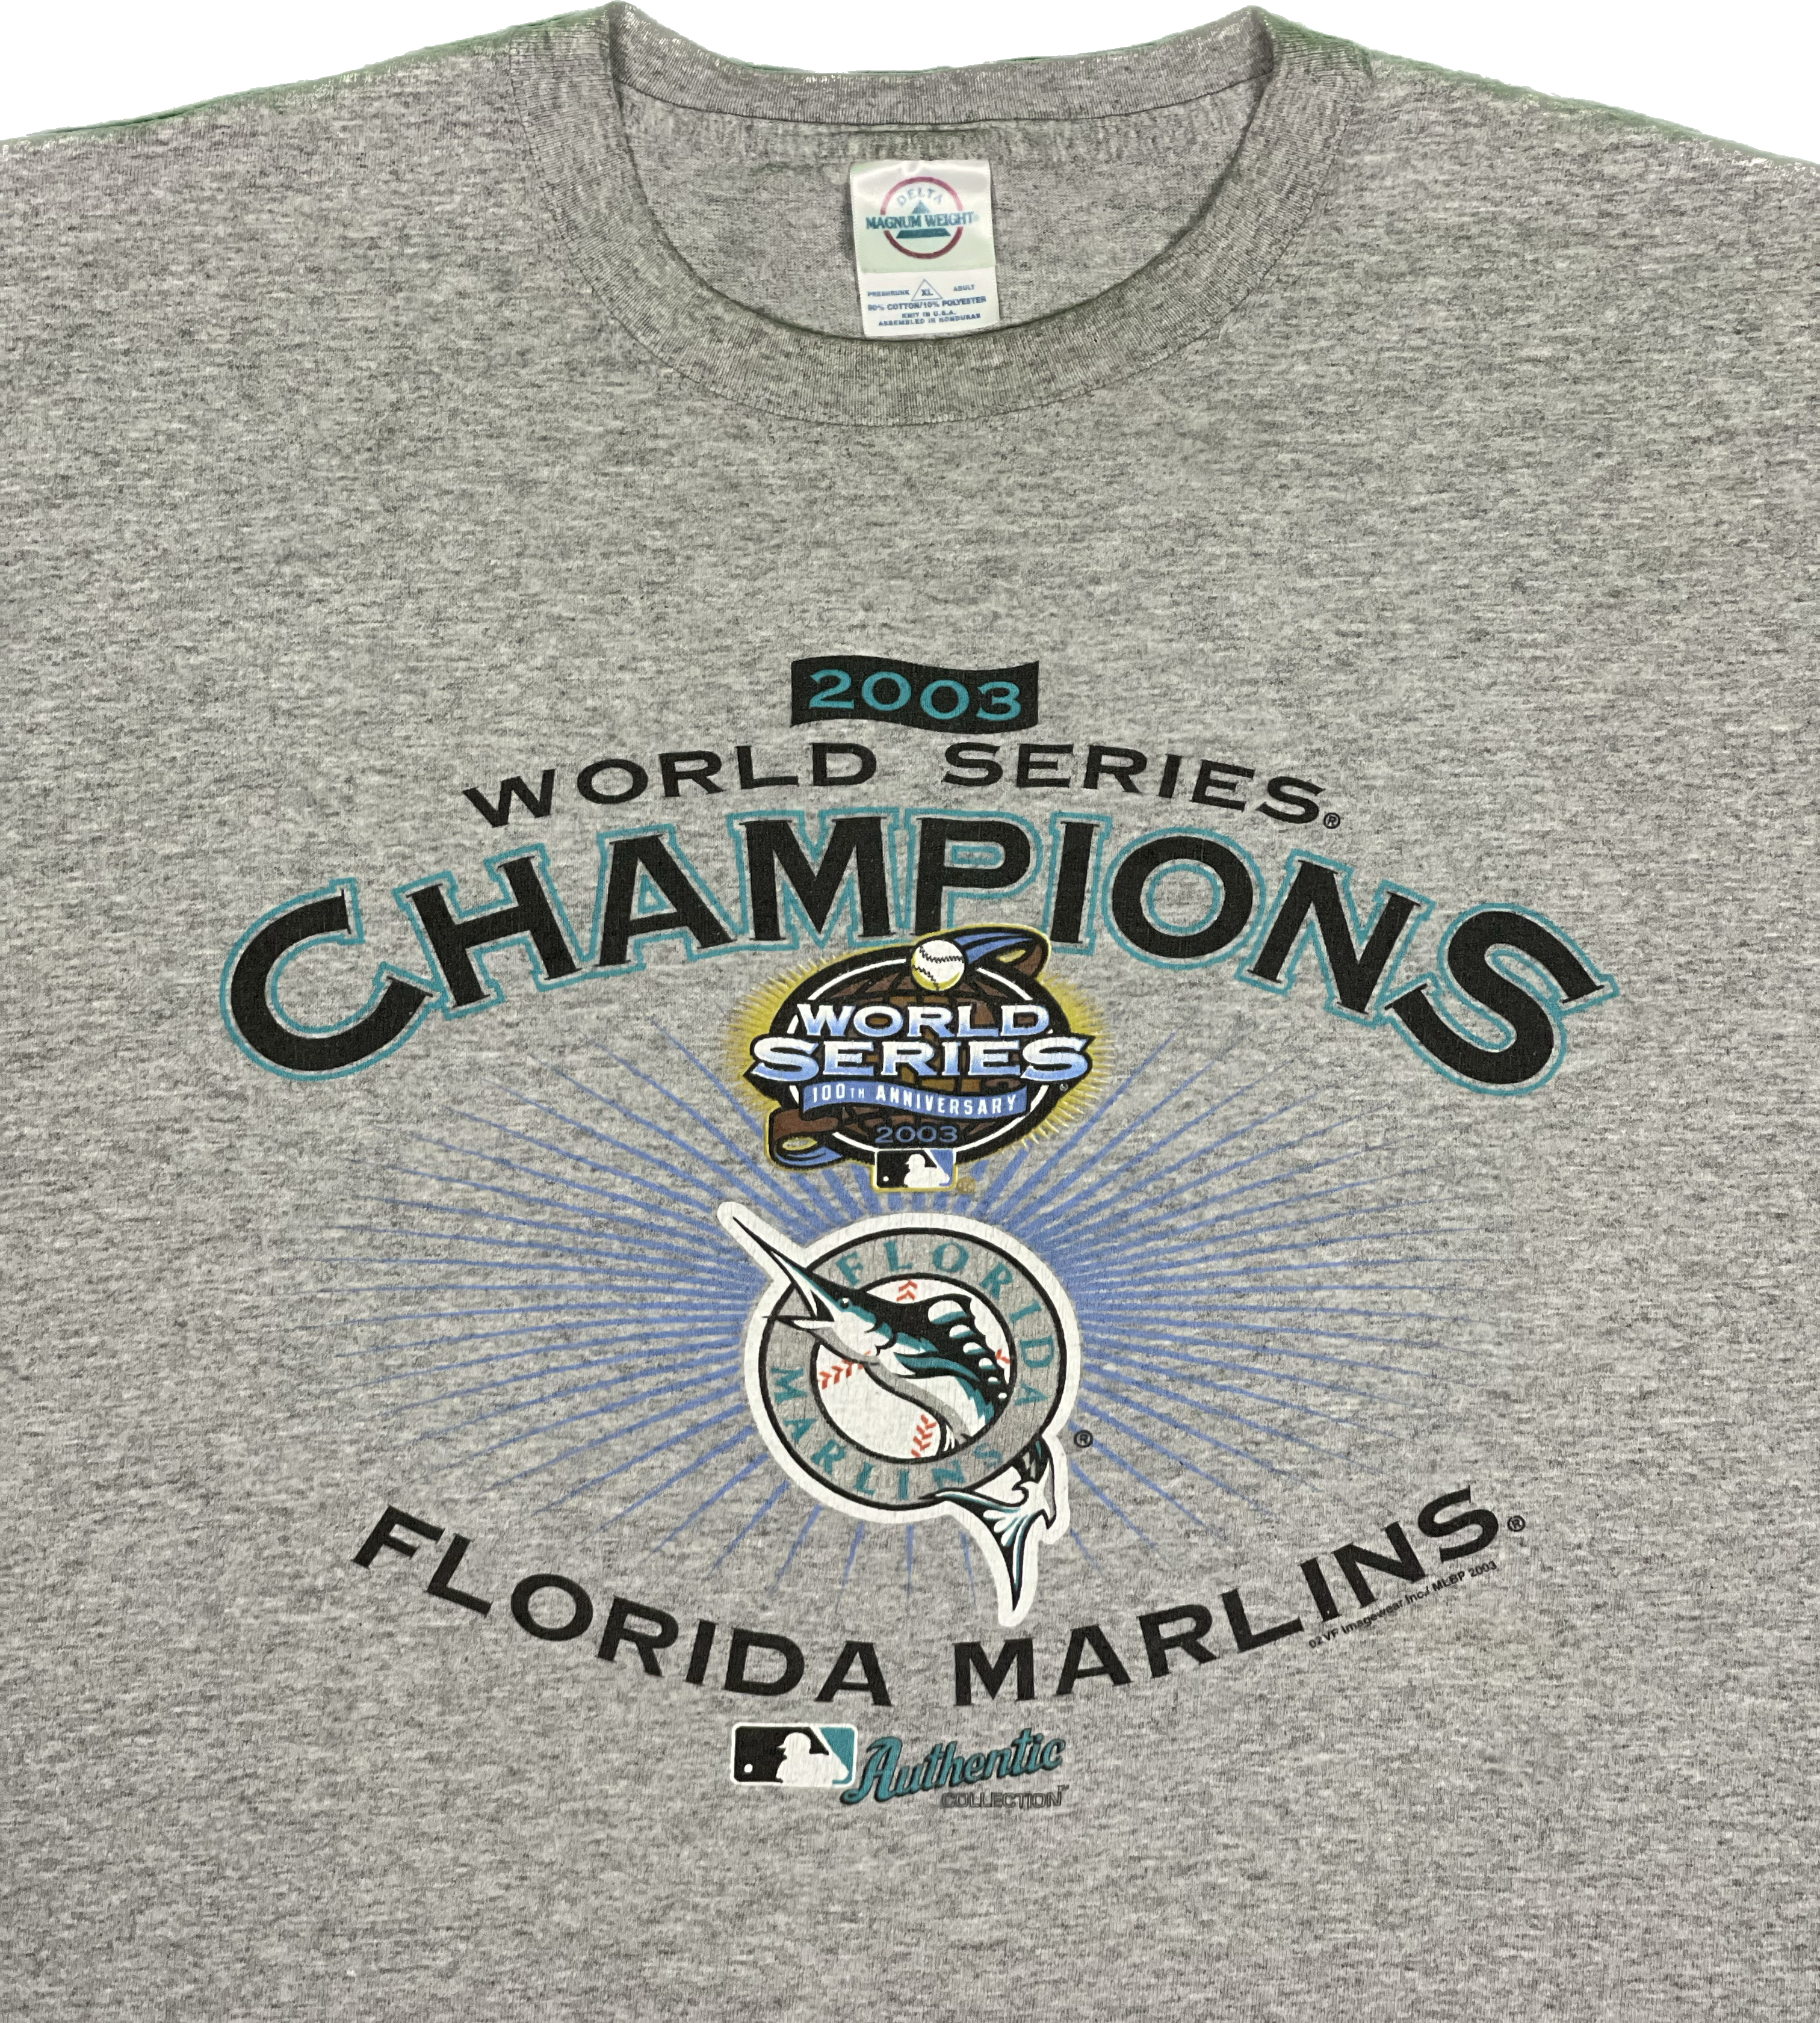 03&#39; Florida Marlins World Series Champions Vintage T-Shirt